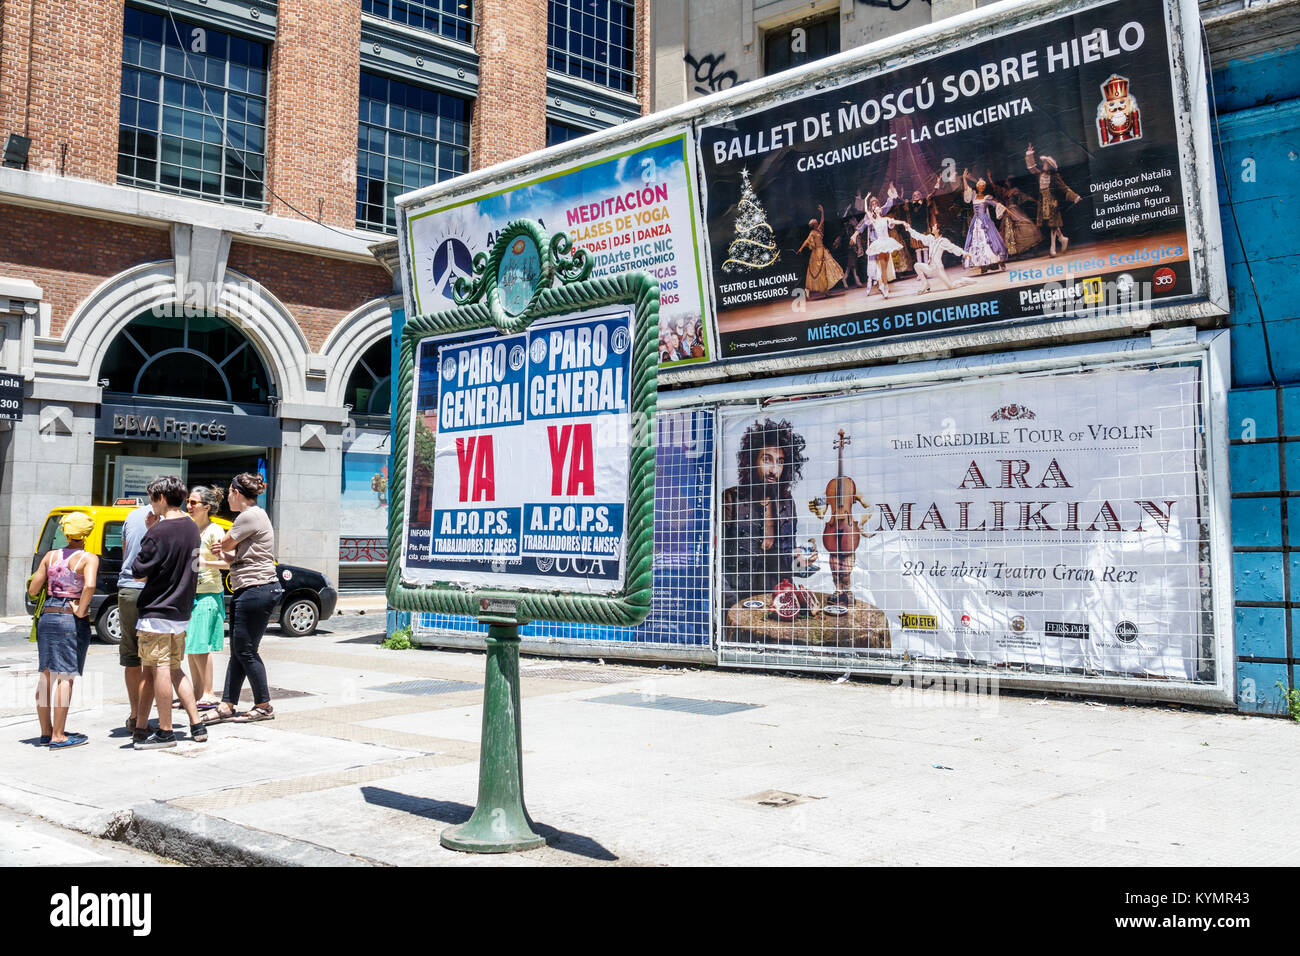 Buenos Aires Argentina,billboard,Moscow Ballet,Ara Malikian concert,sidewalk information poster,general strike announcement,Hispanic Latin Latino ethn Stock Photo